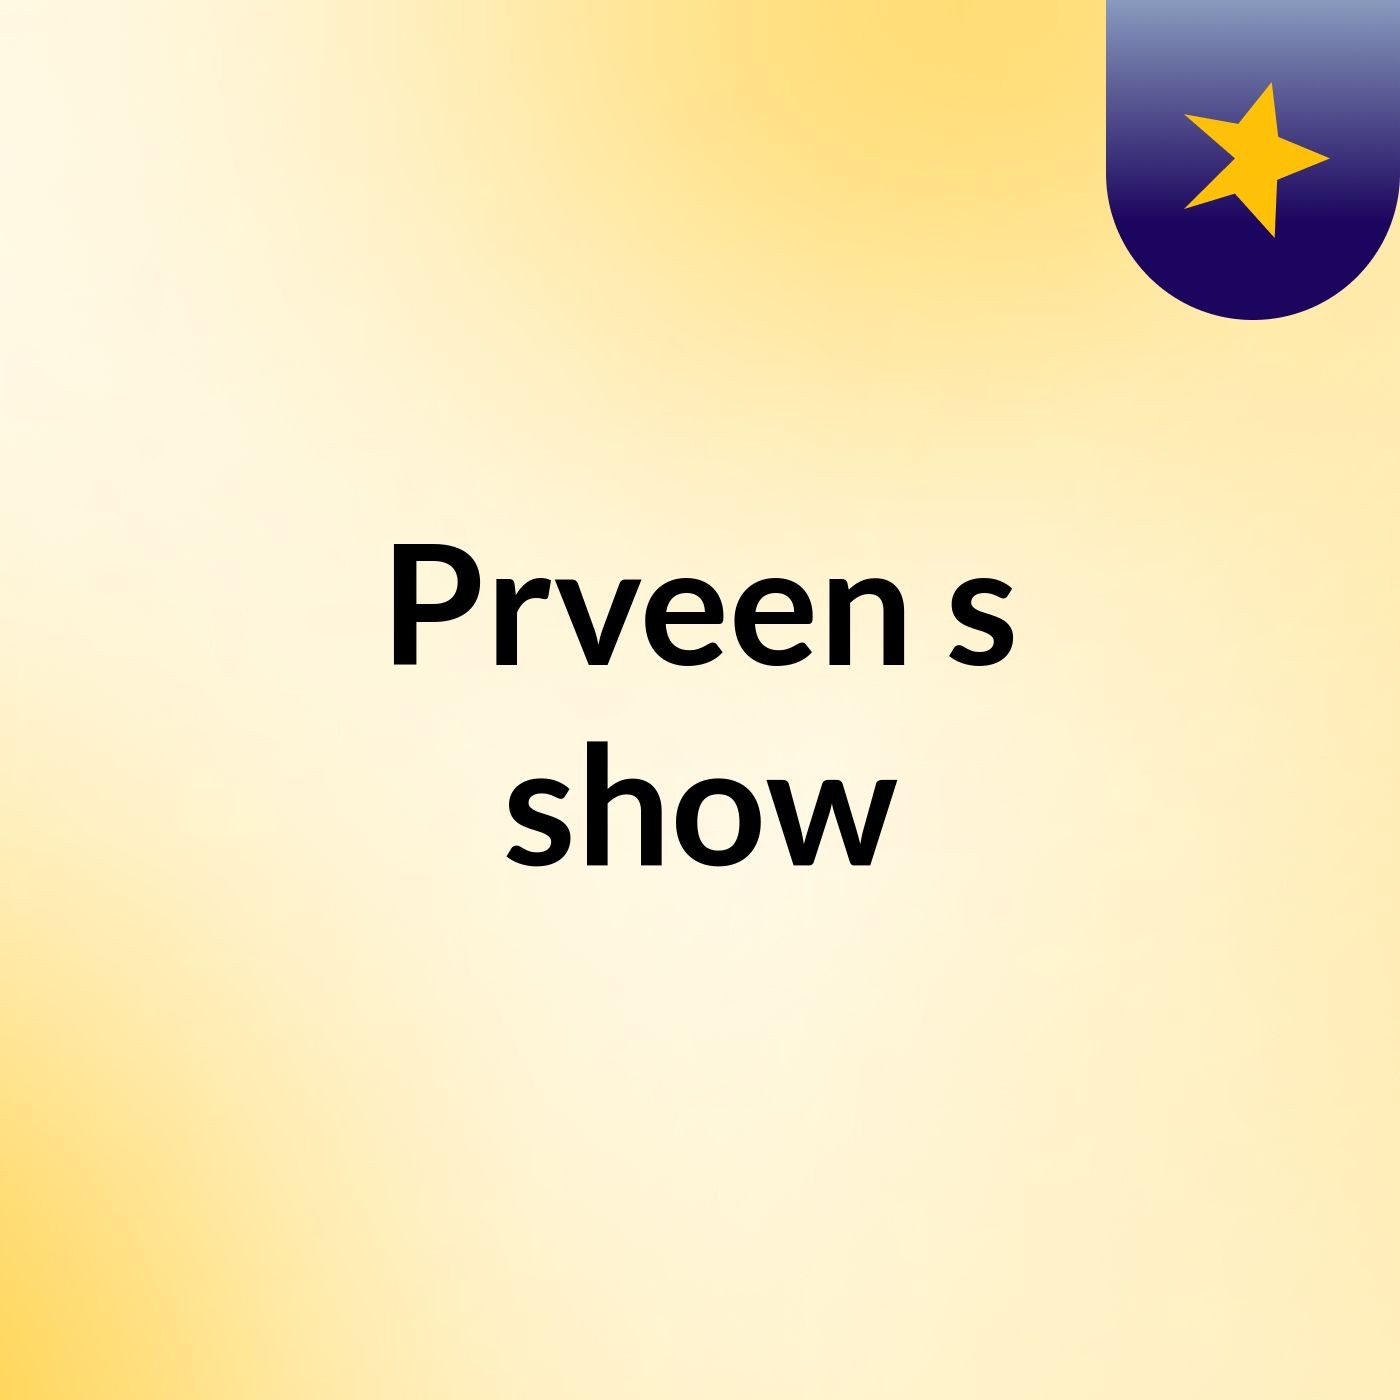 Prveen's show